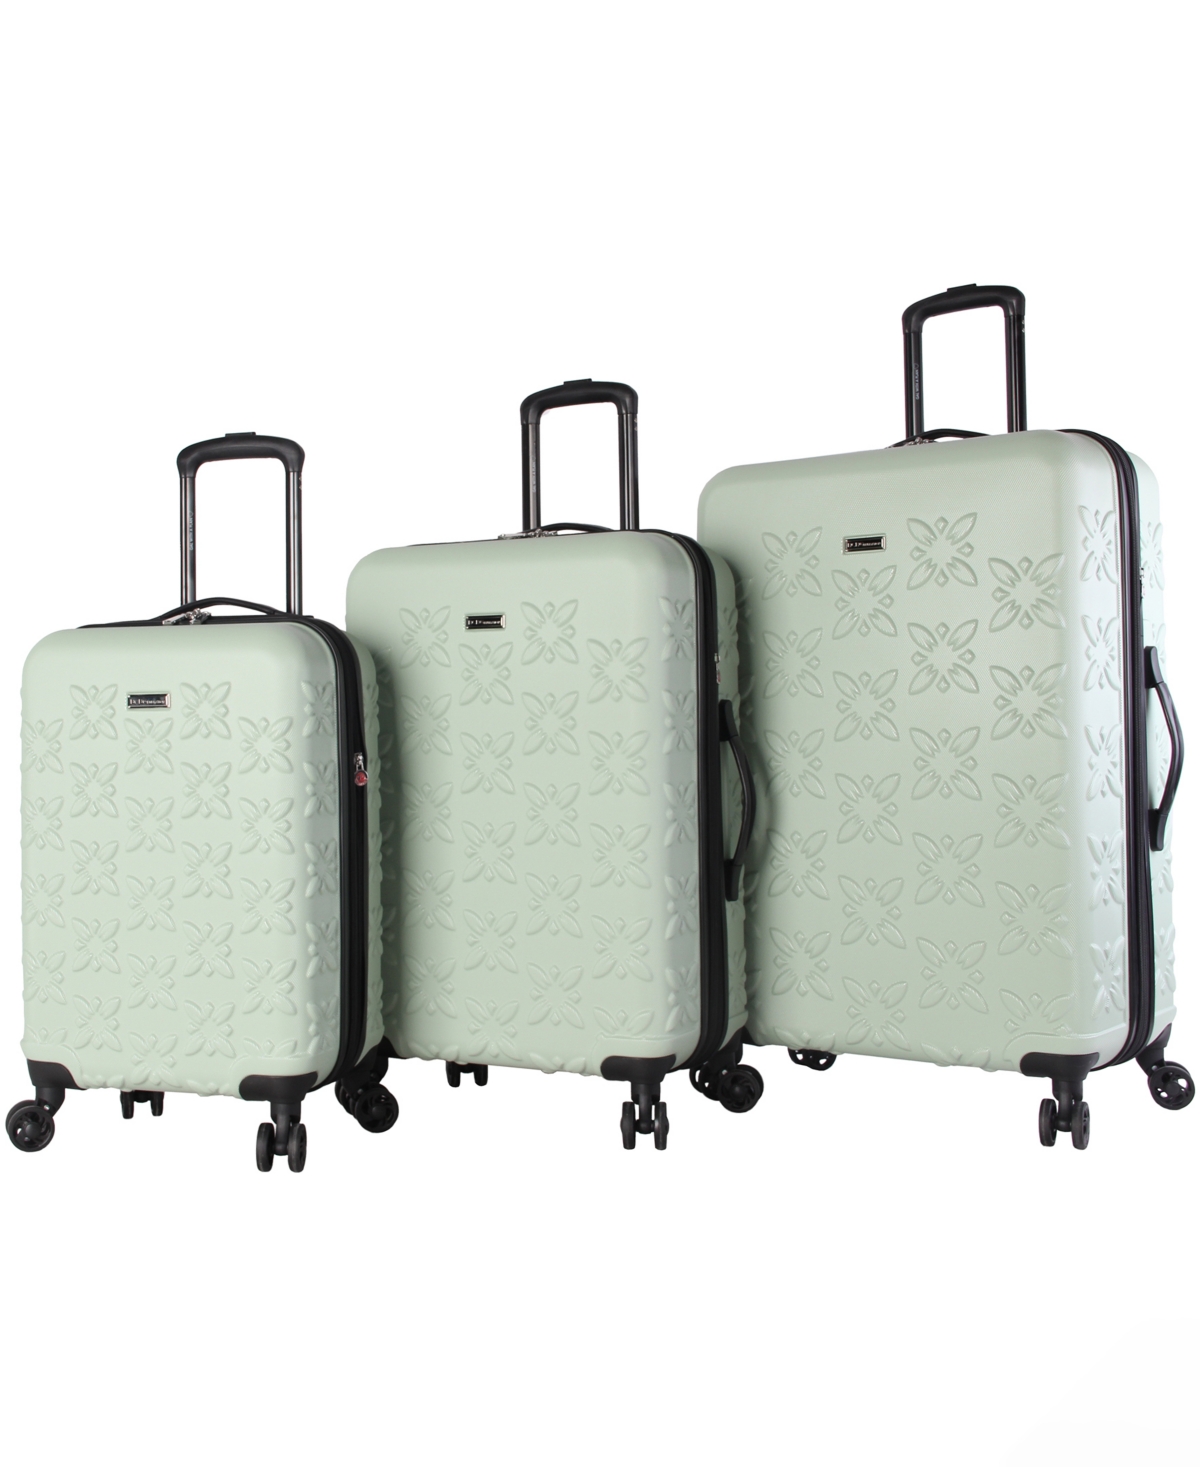 BCBGeneration 3 Piece Luggage Set - Sage Green